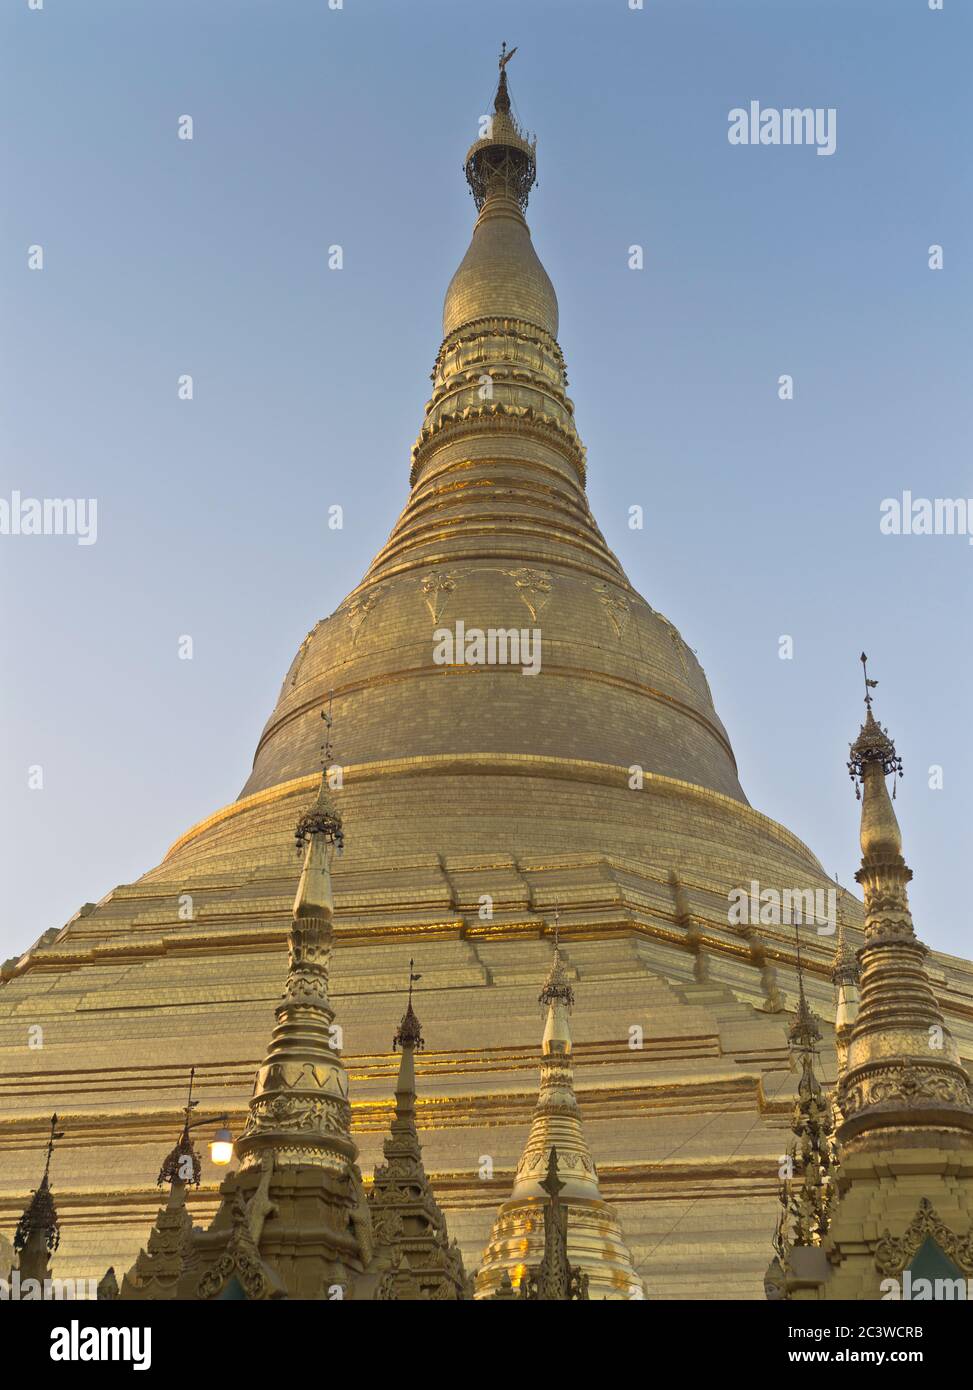 dh Shwedagon Pagoda templo YANGON MYANMAR templos budistas Gran Dagón Zedi Daw estupa dorada Hoja de oro birmano Foto de stock